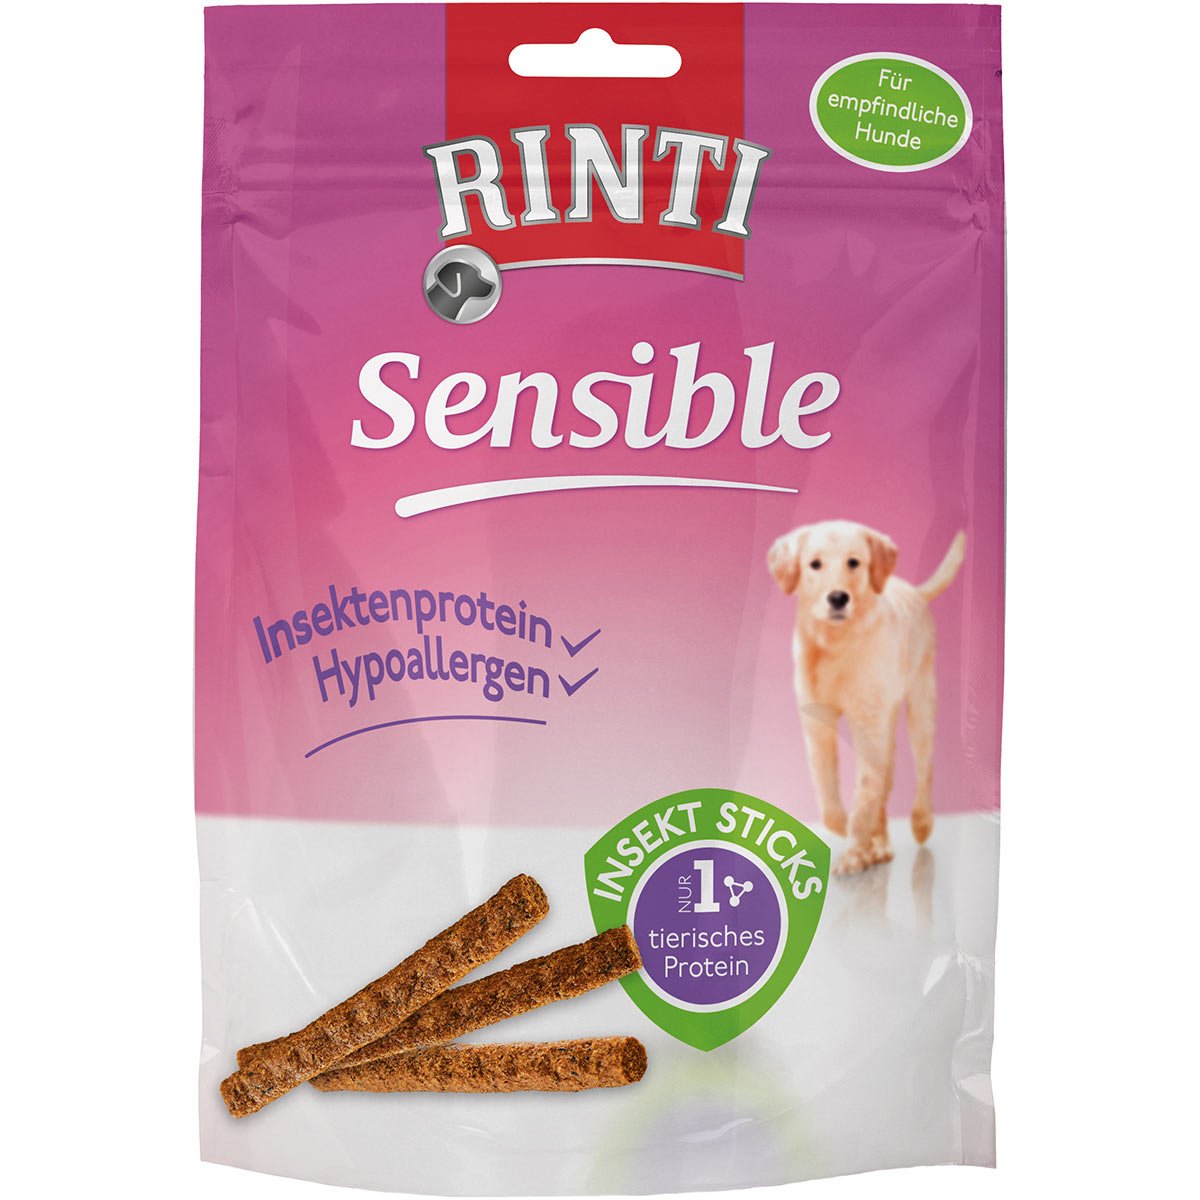 Rinti Sensible Snack Insekt Sticks 50g von Rinti